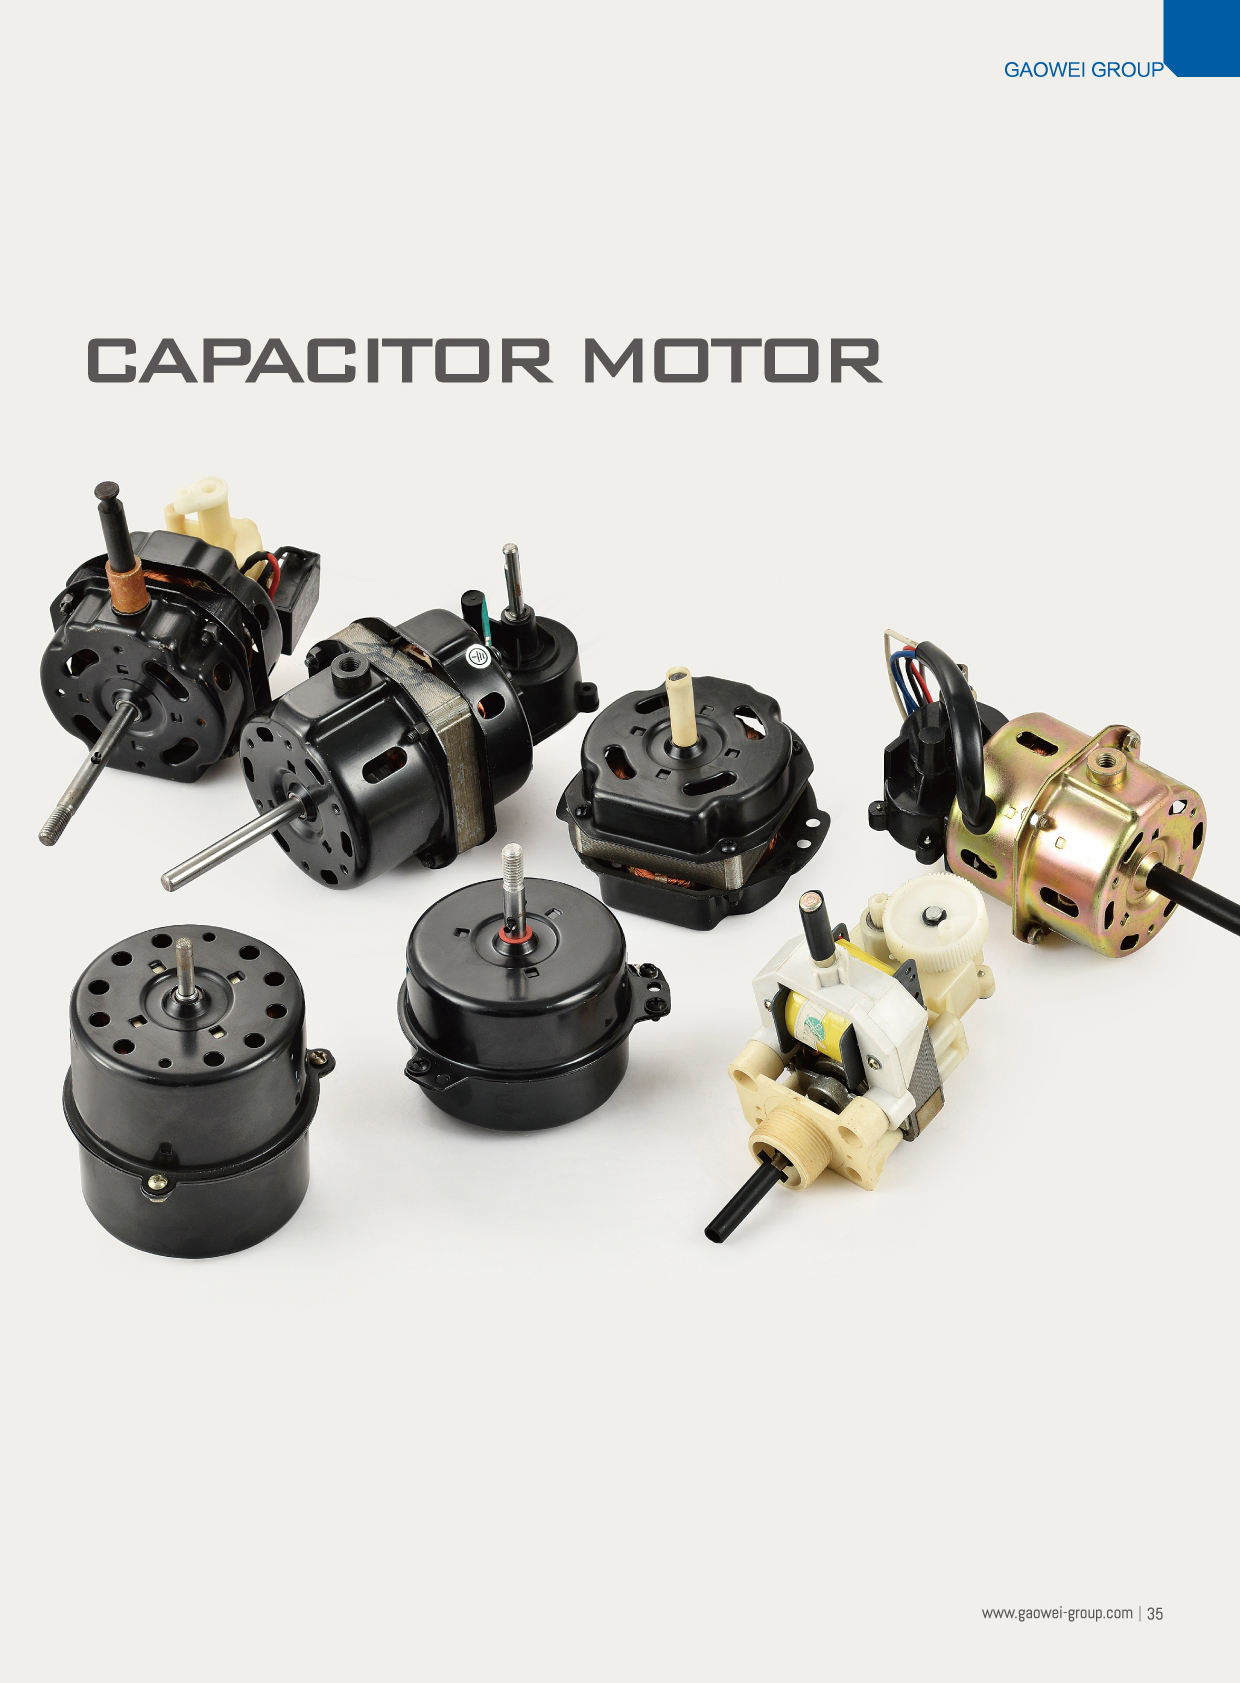 Capacitor Motor